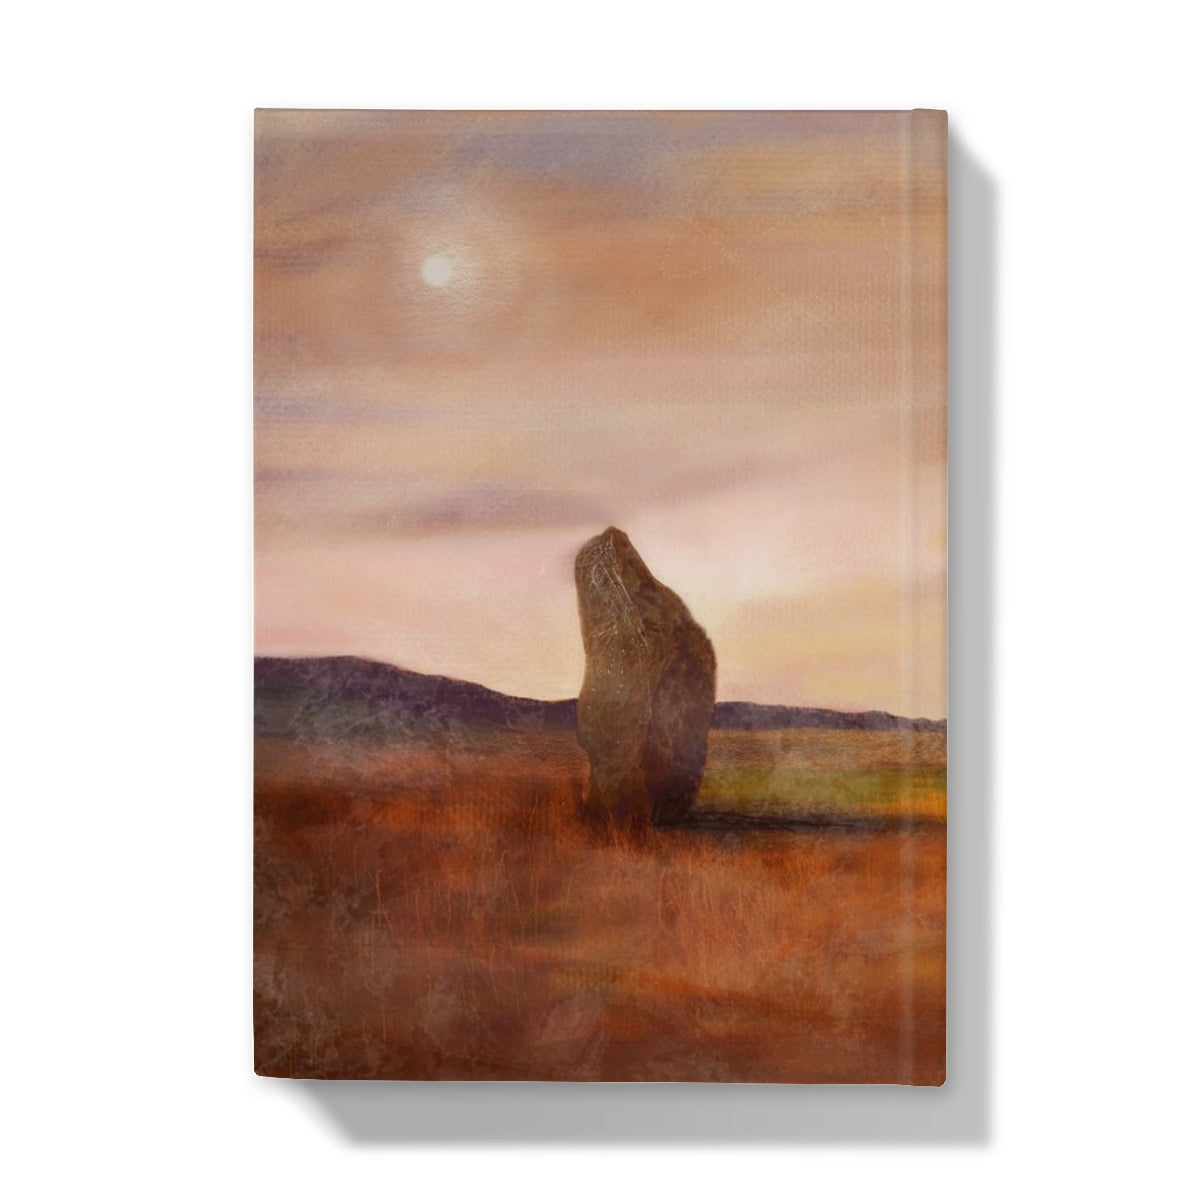 Machrie Moor Arran Art Gifts Hardback Journal-Journals & Notebooks-Arran Art Gallery-Paintings, Prints, Homeware, Art Gifts From Scotland By Scottish Artist Kevin Hunter